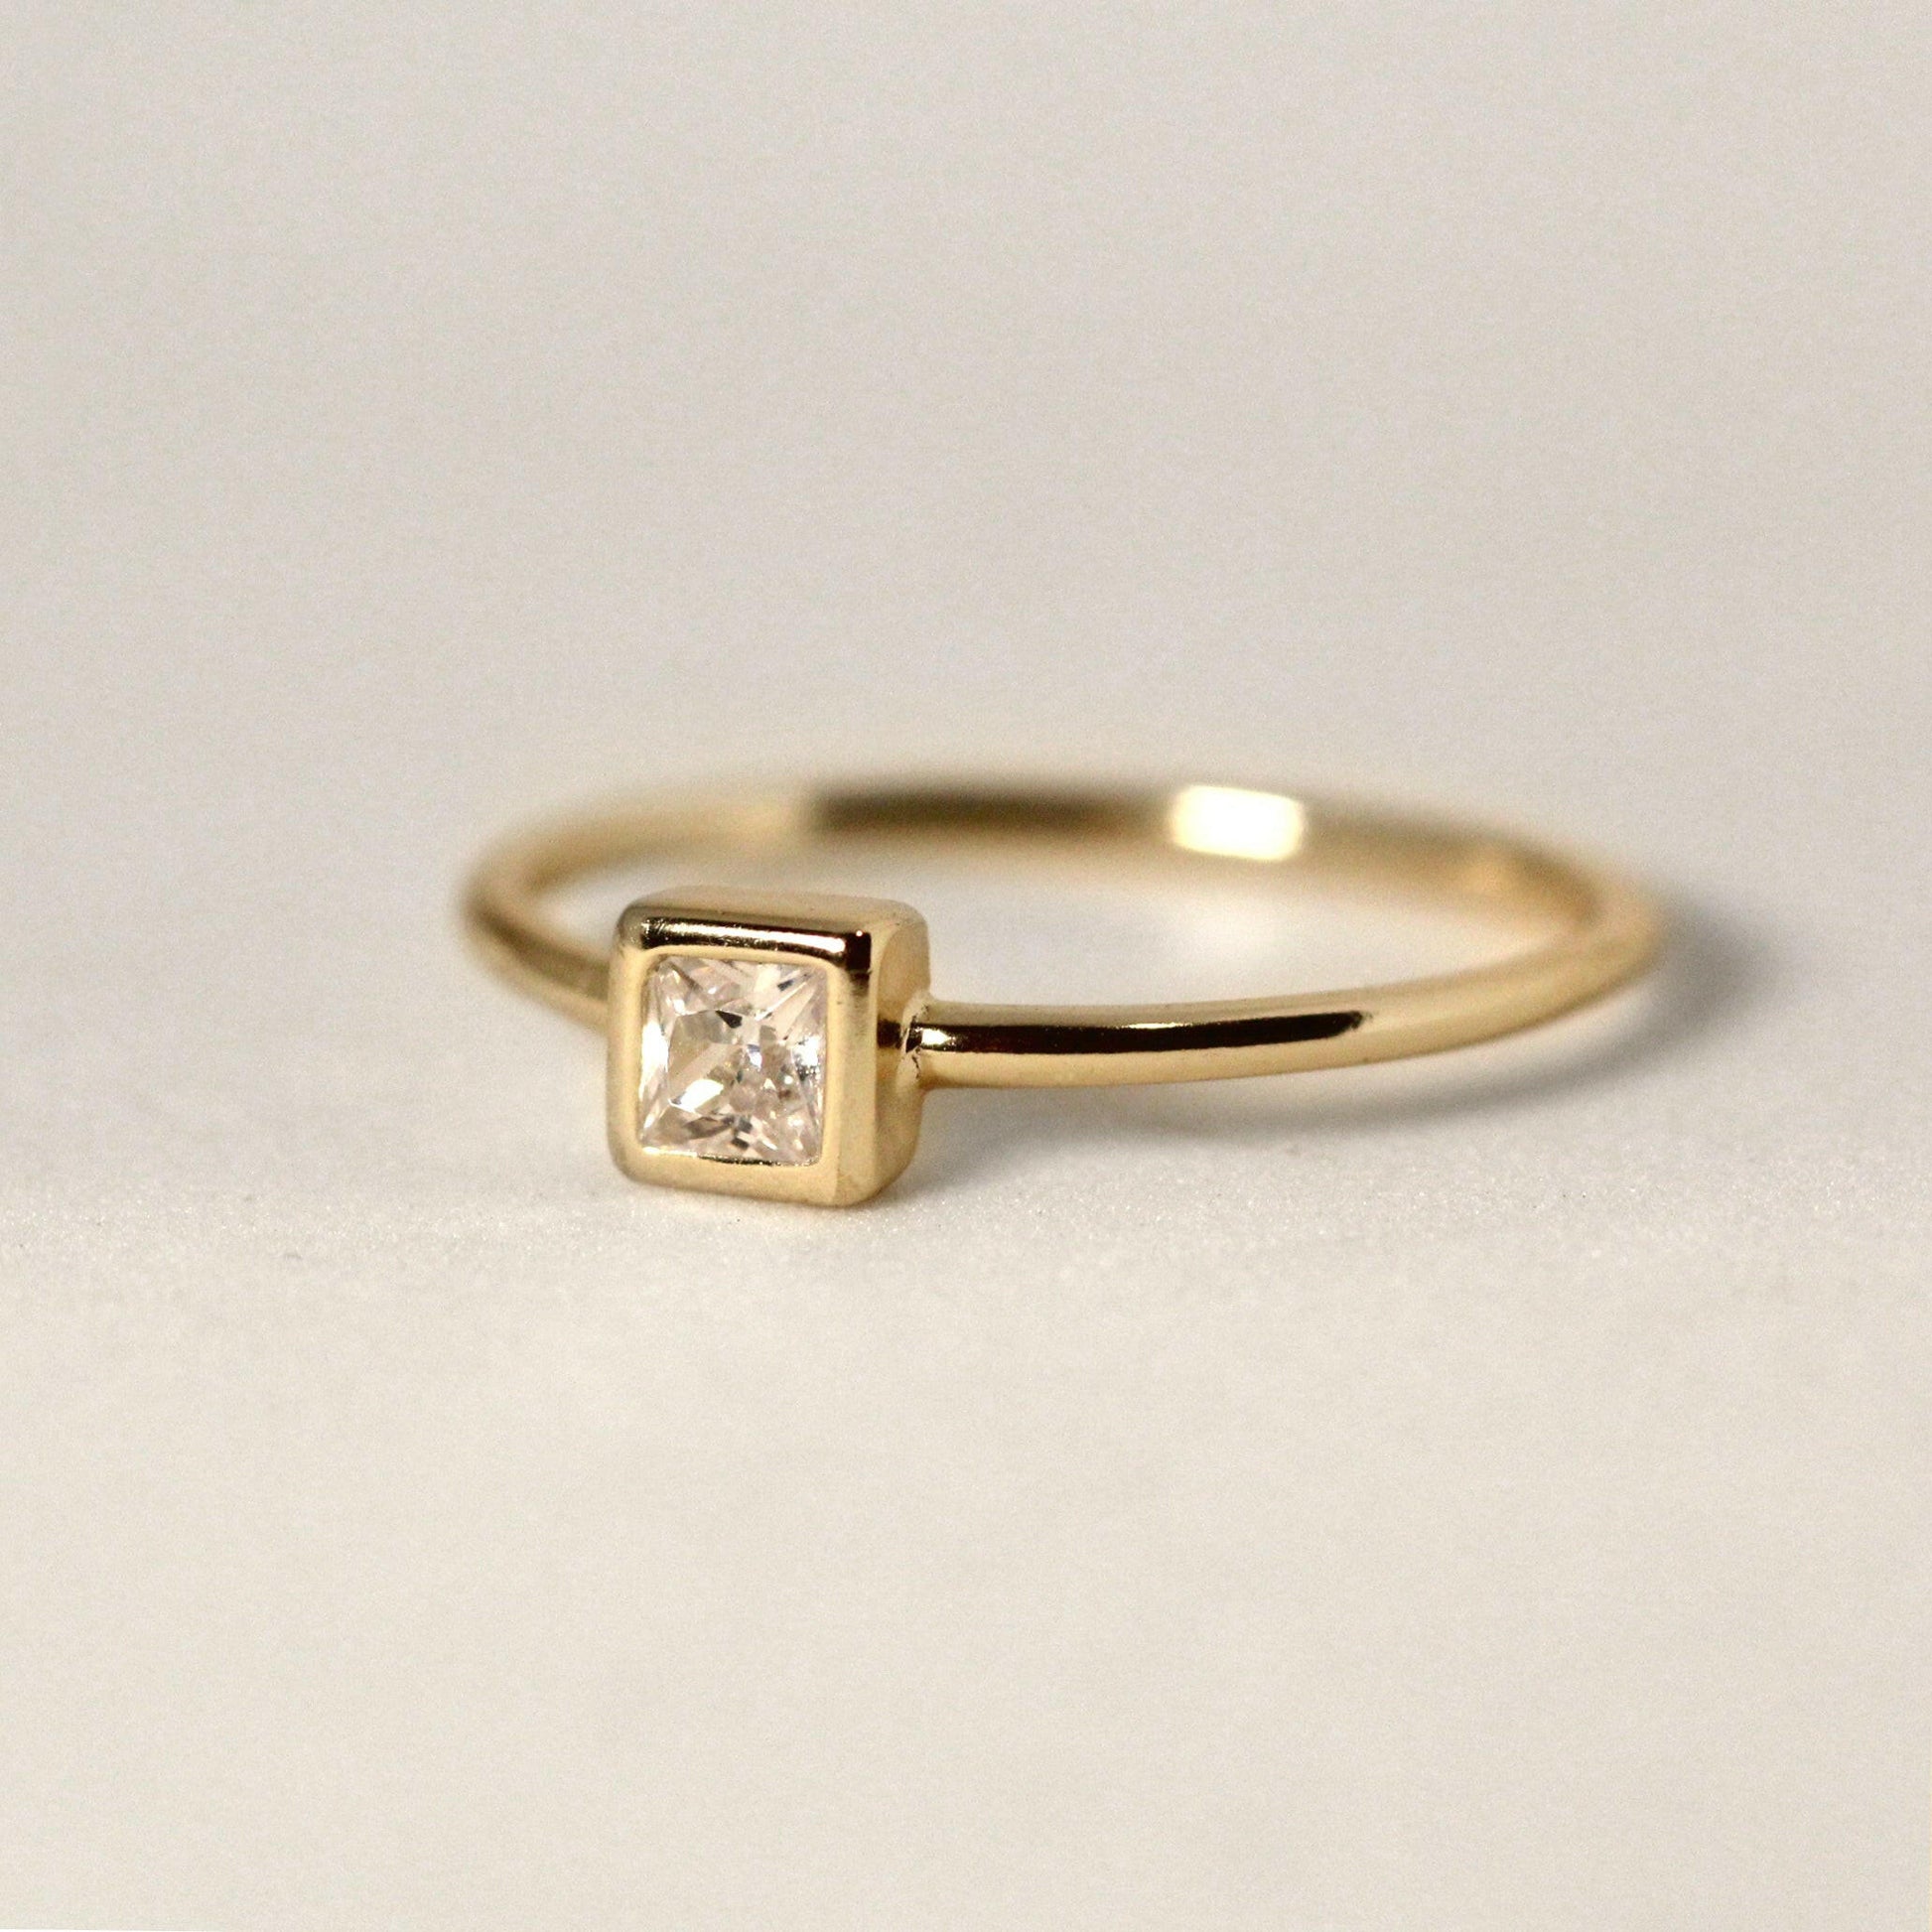 Princess Cut Diamond Engagement Ring in 14k Gold.